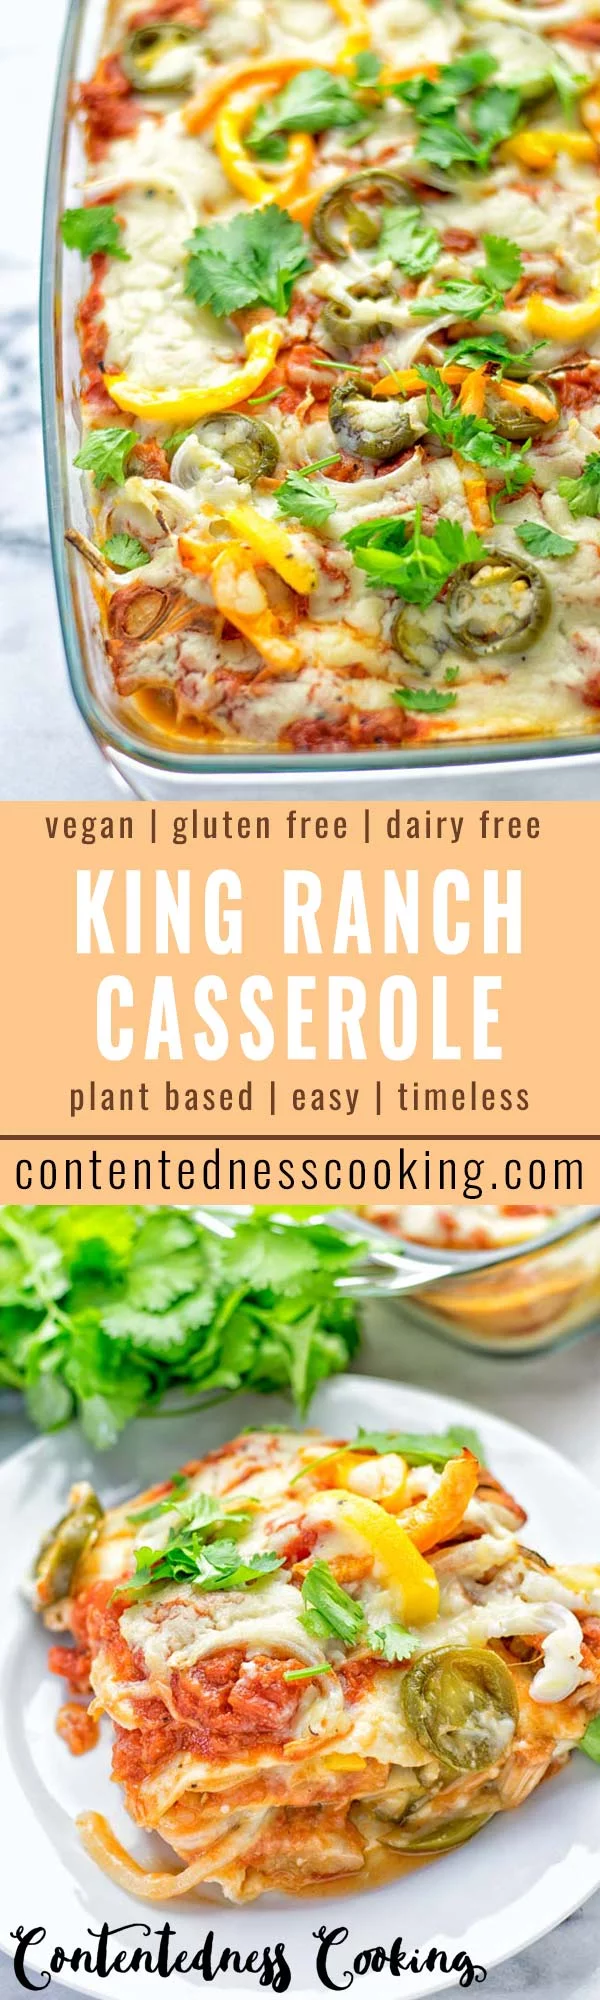 King Ranch Casserole | #vegan #plantbased #dairyfree #contentednesscooking 